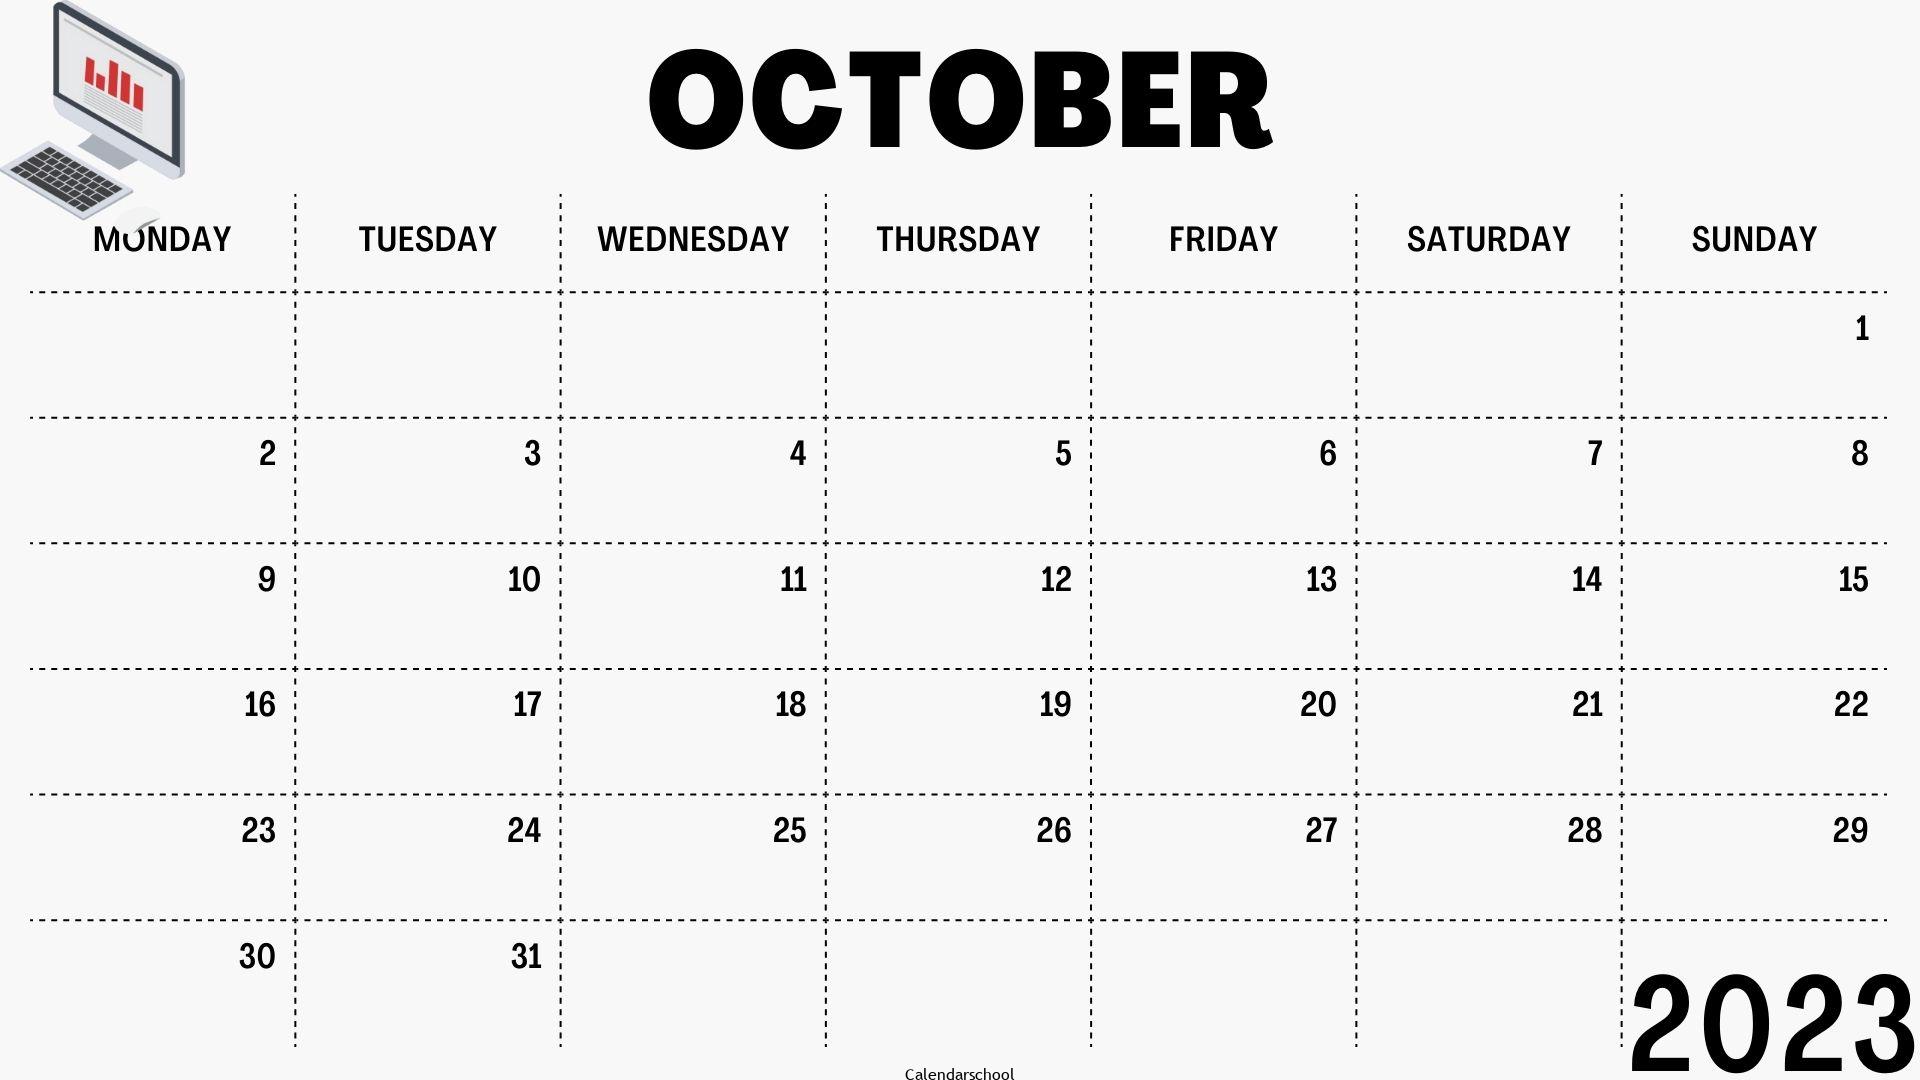 October 2023 Free Calendar Template